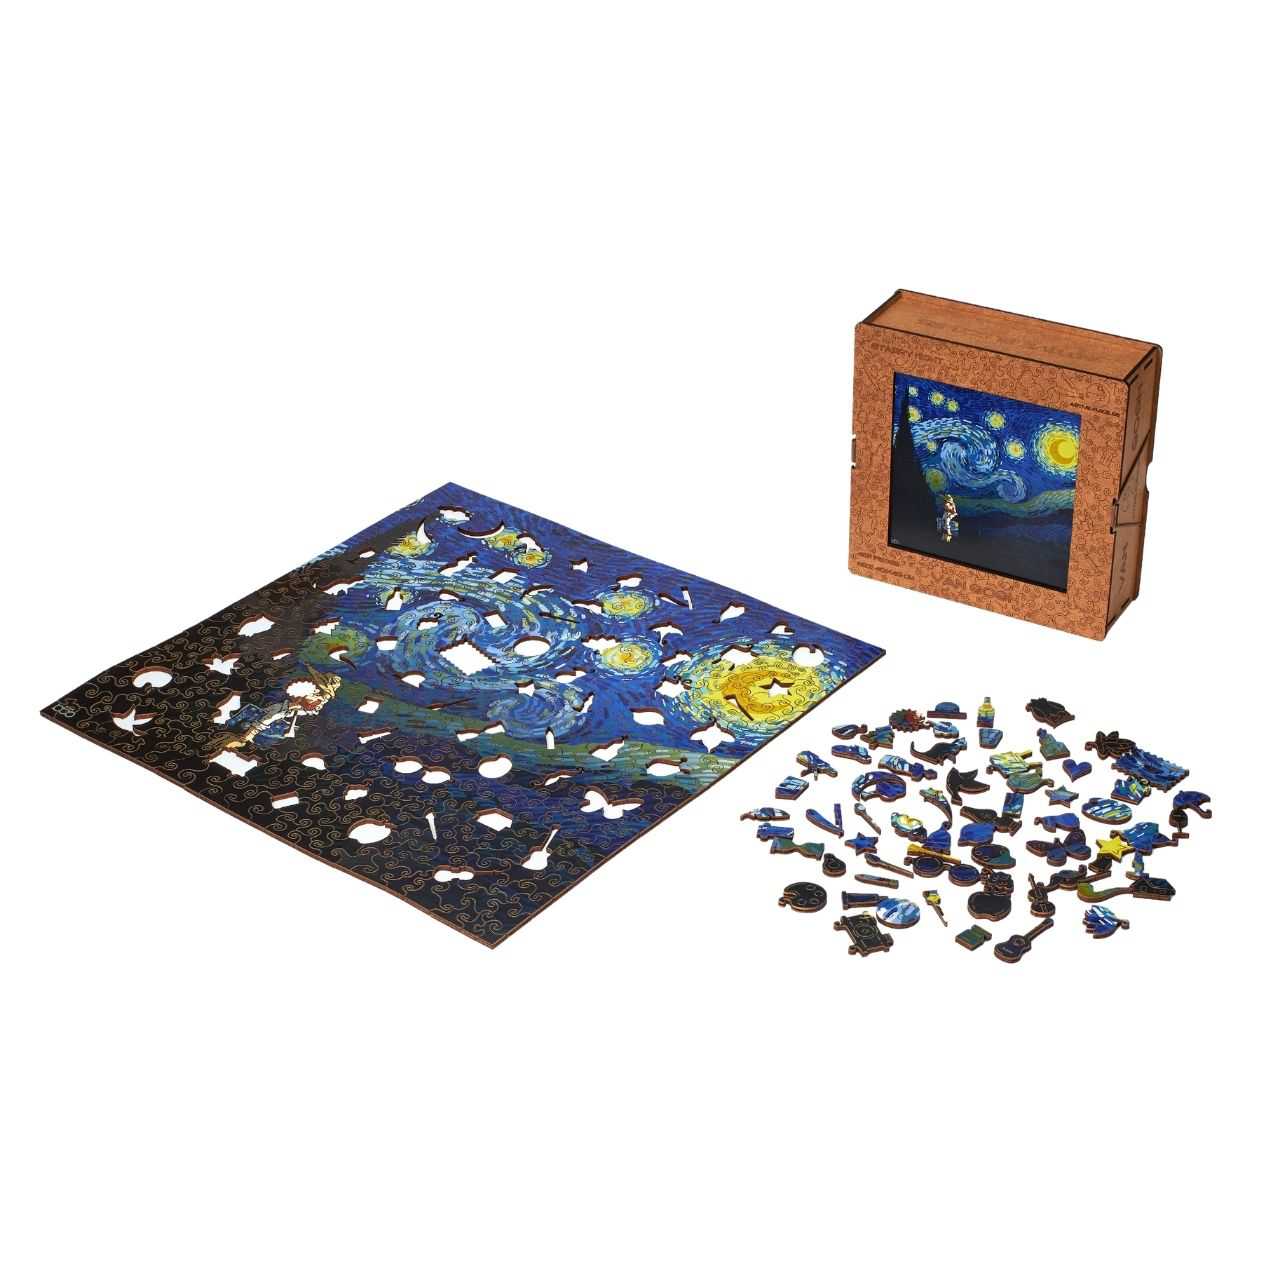 Horizontal Box And Vangogh Wooden Puzzles